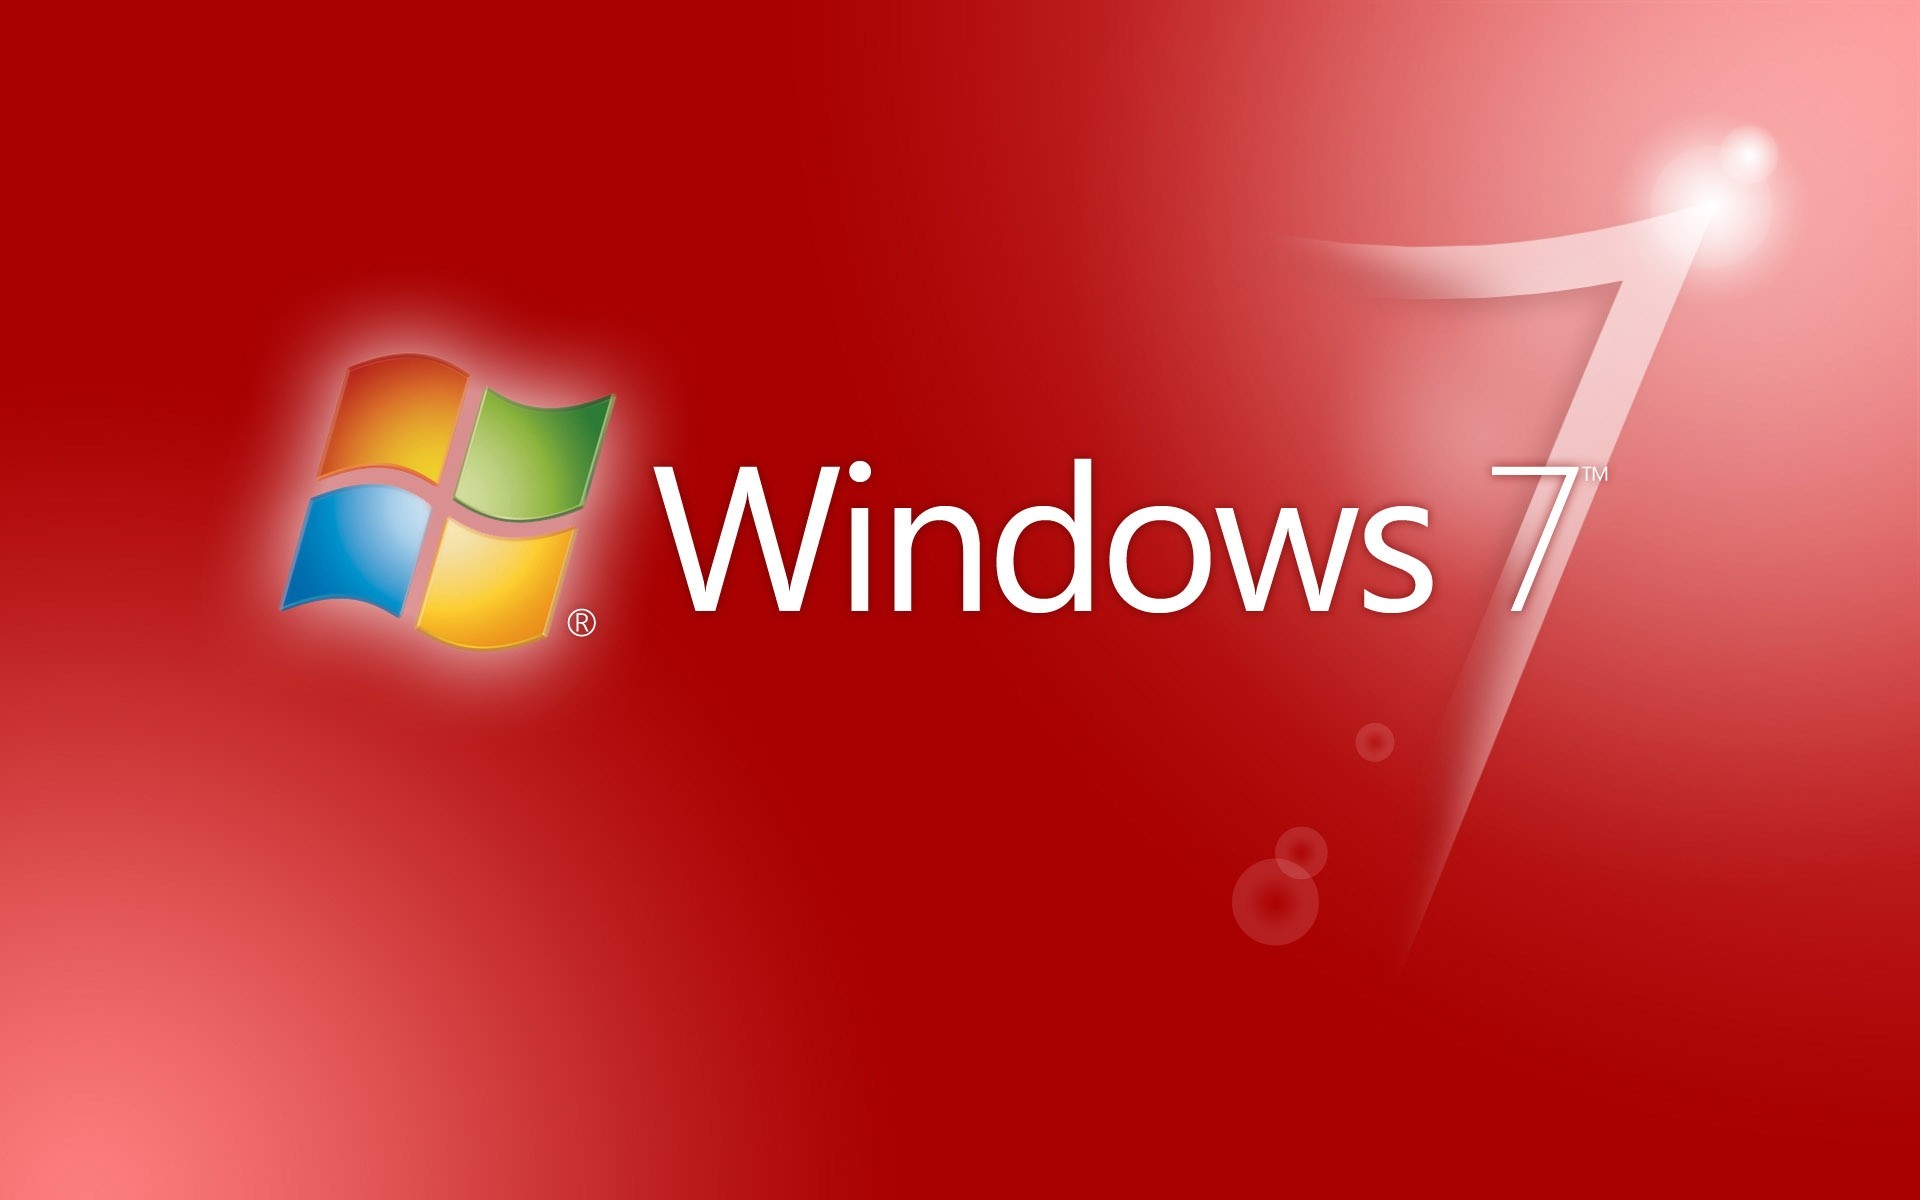 Модель windows 7. Виндовс 7. Логотип Windows. Обои Windows 7. Картинки виндовс.